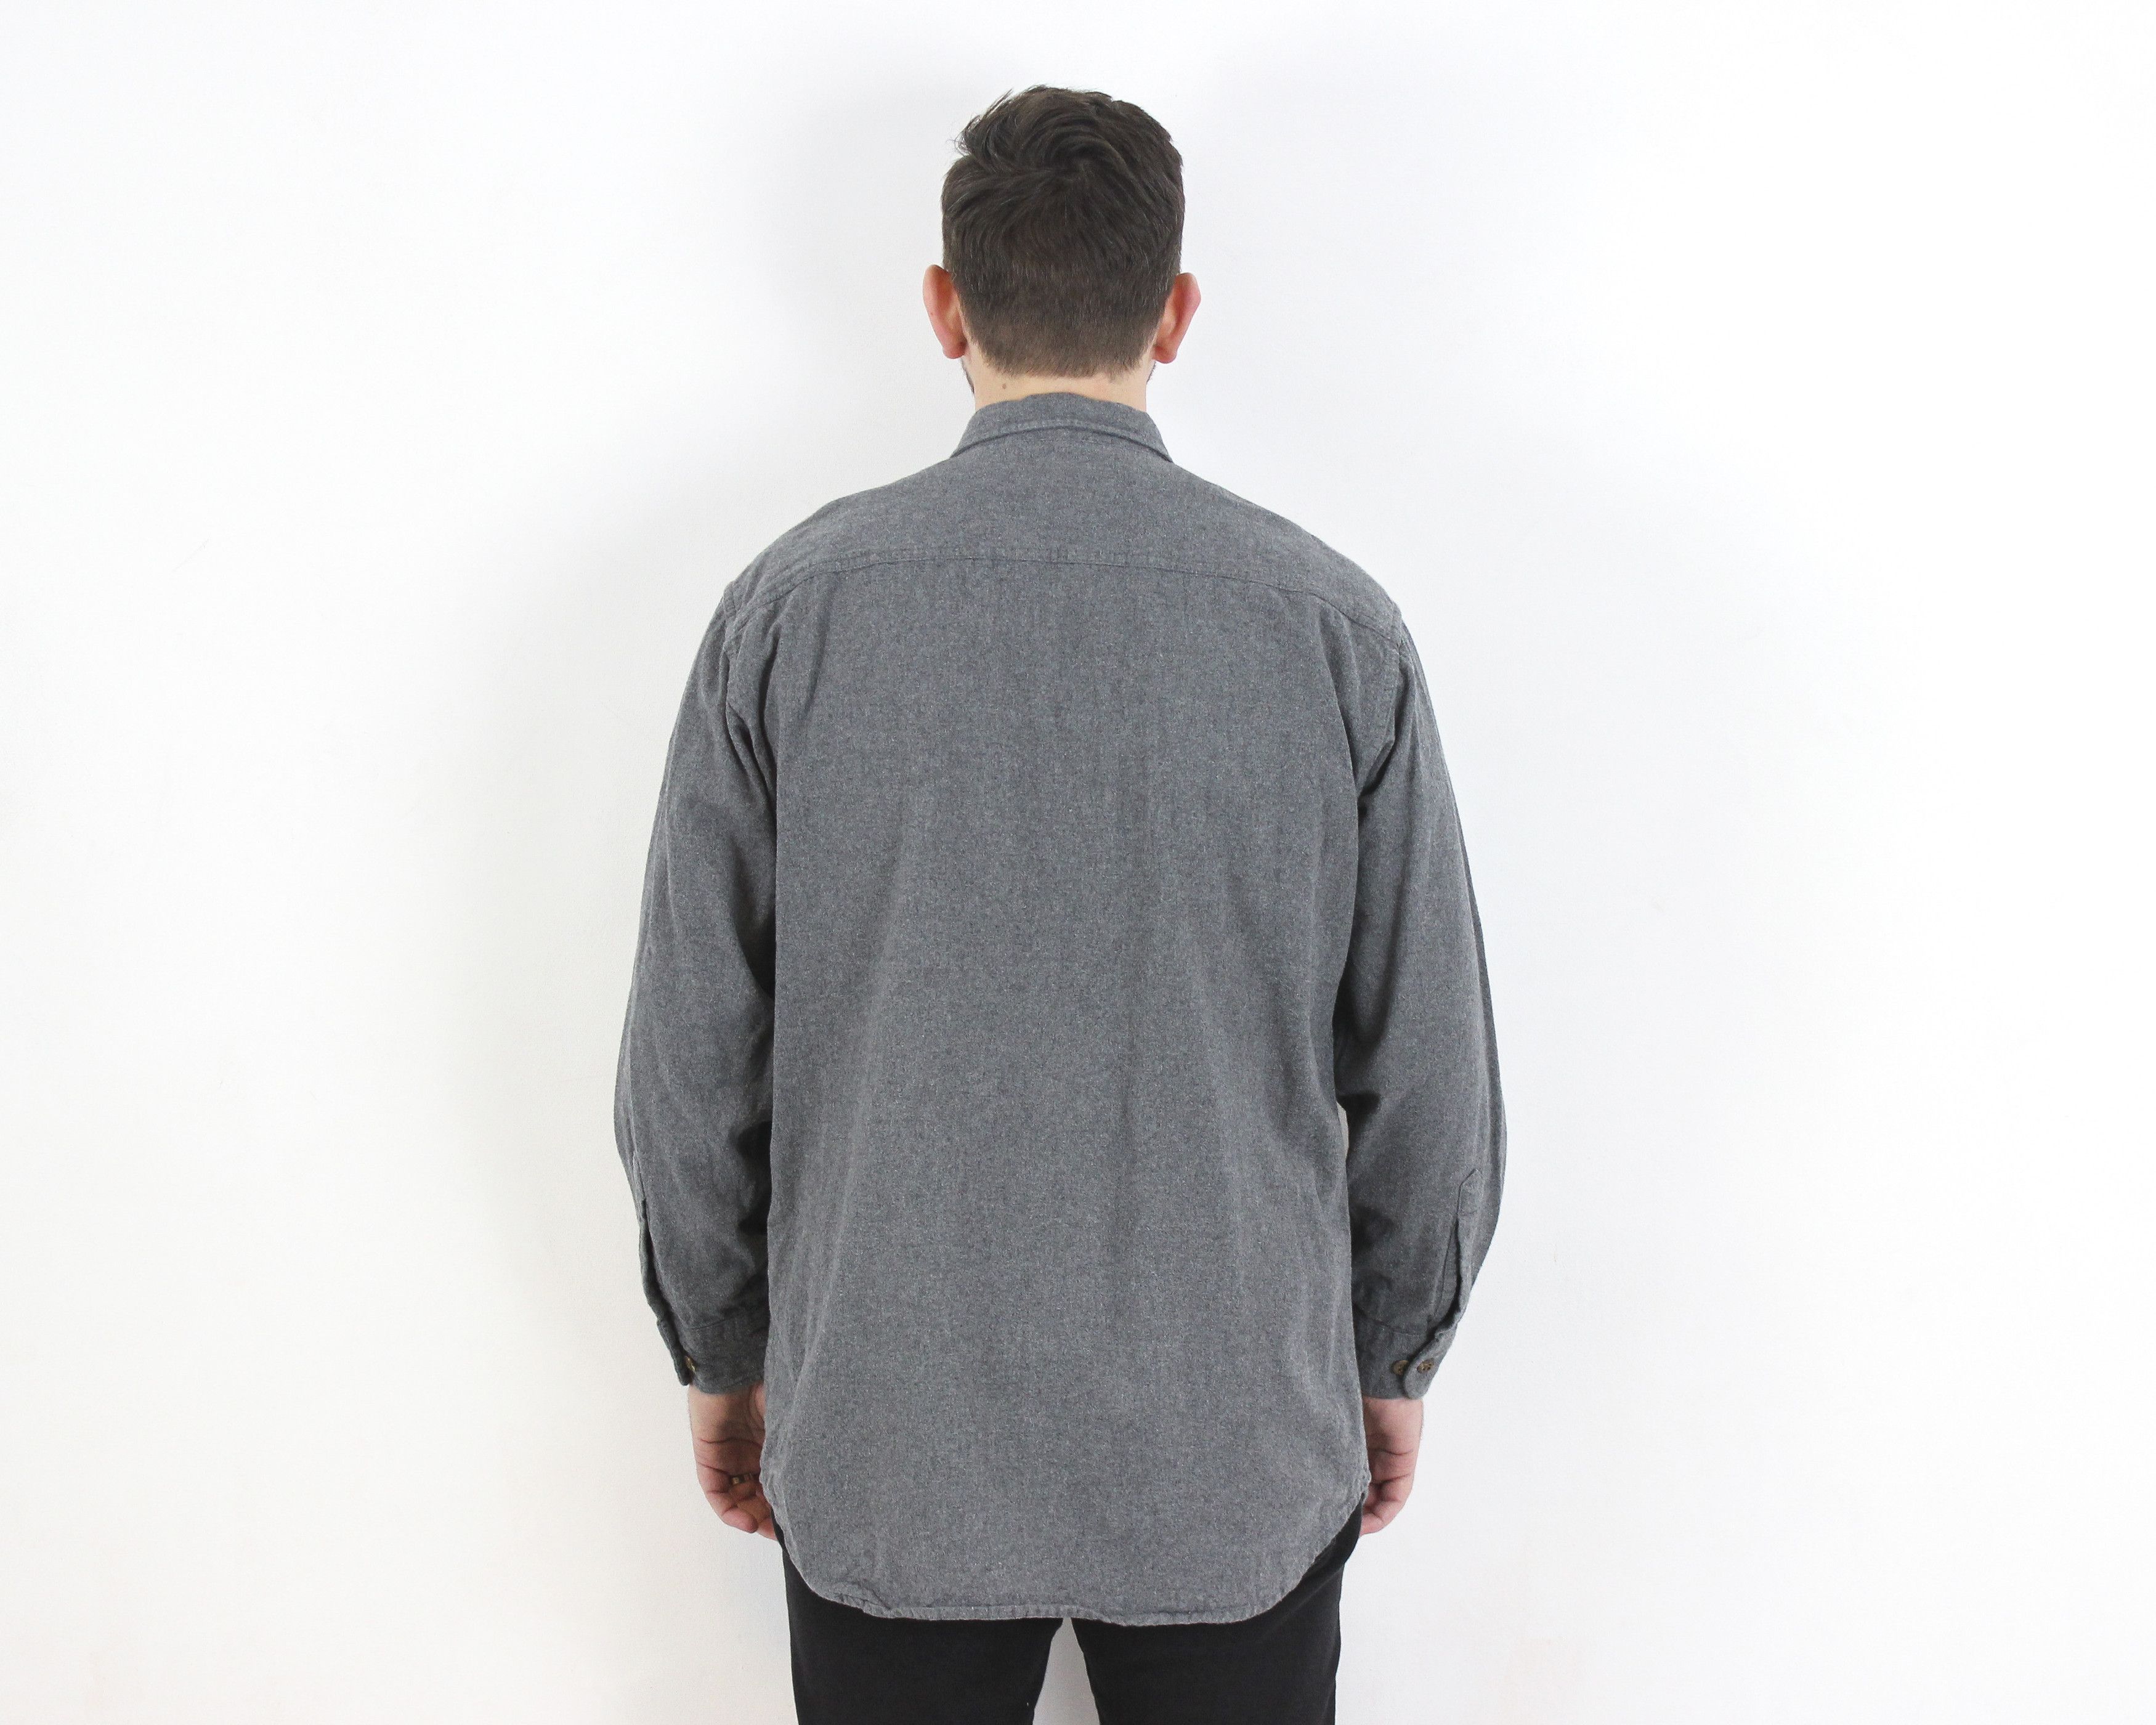 Vintage SR JOHN'S BAY Chamois Cloth Shirt Soft Cotton Button Up Size US L / EU 52-54 / 3 - 5 Preview